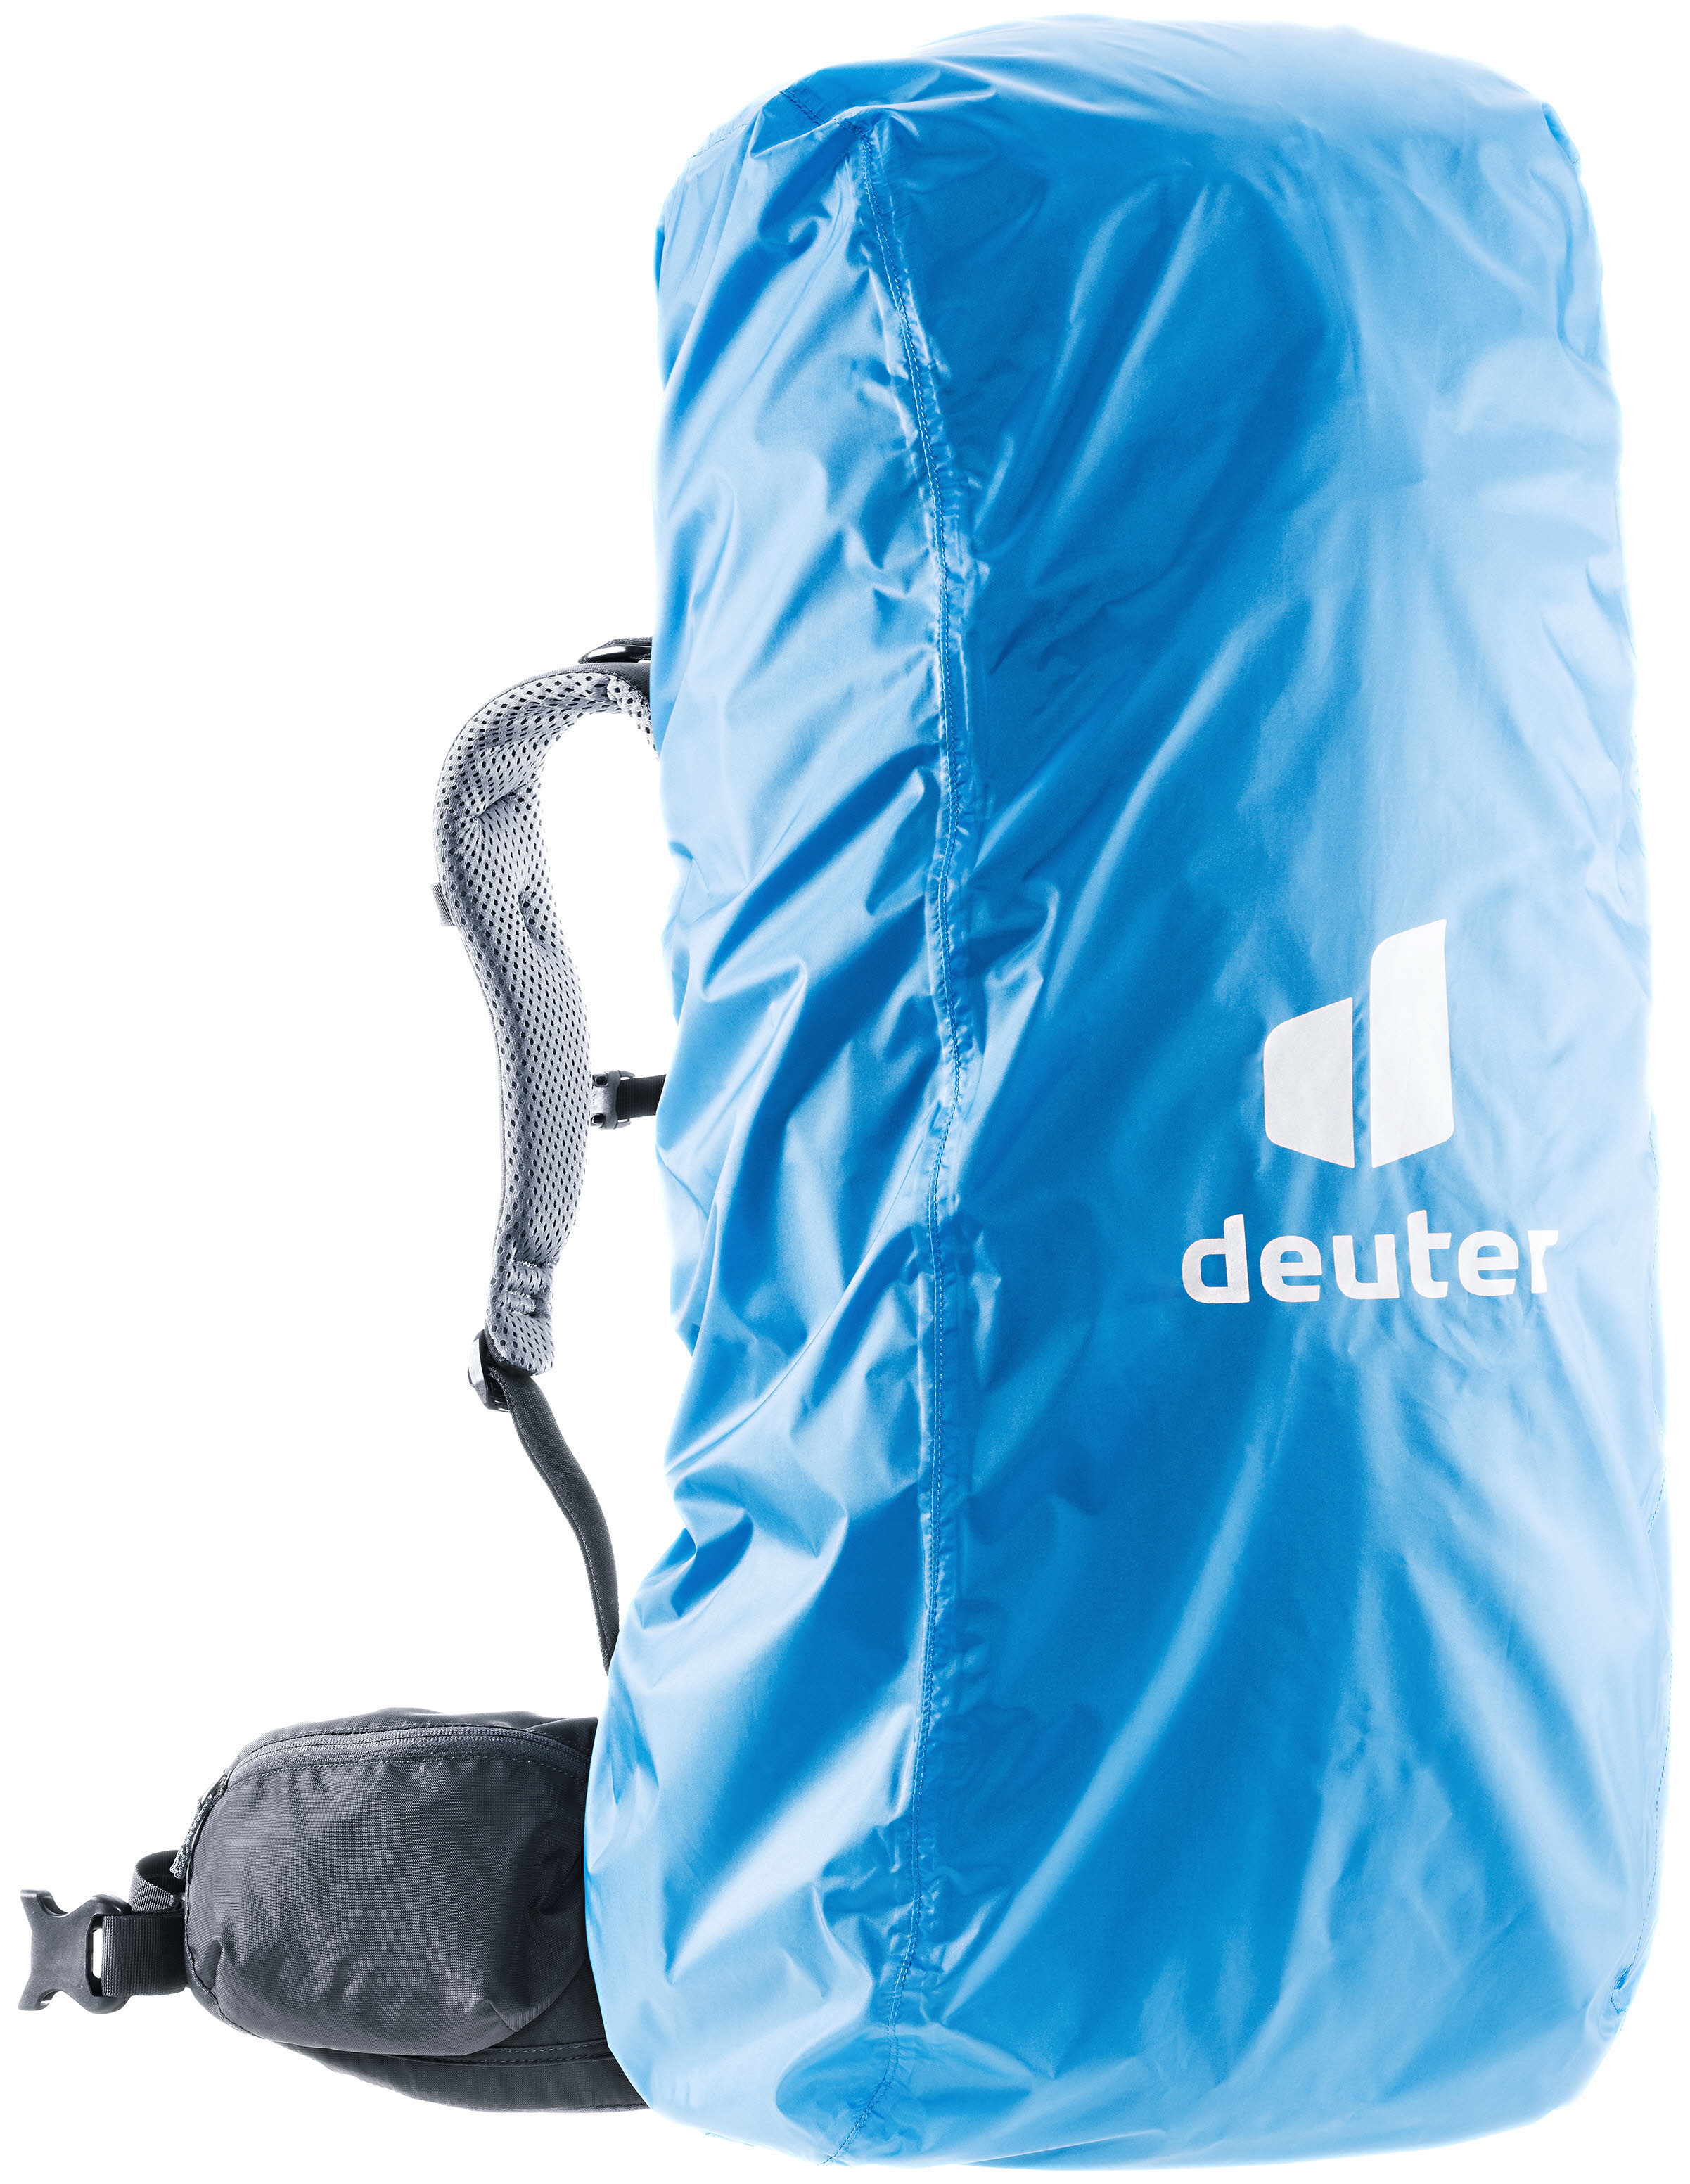 Deuter Raincover III 45-90L Regenüberzugtasche für Rucksäcke Regenschutzhülle blau NEU